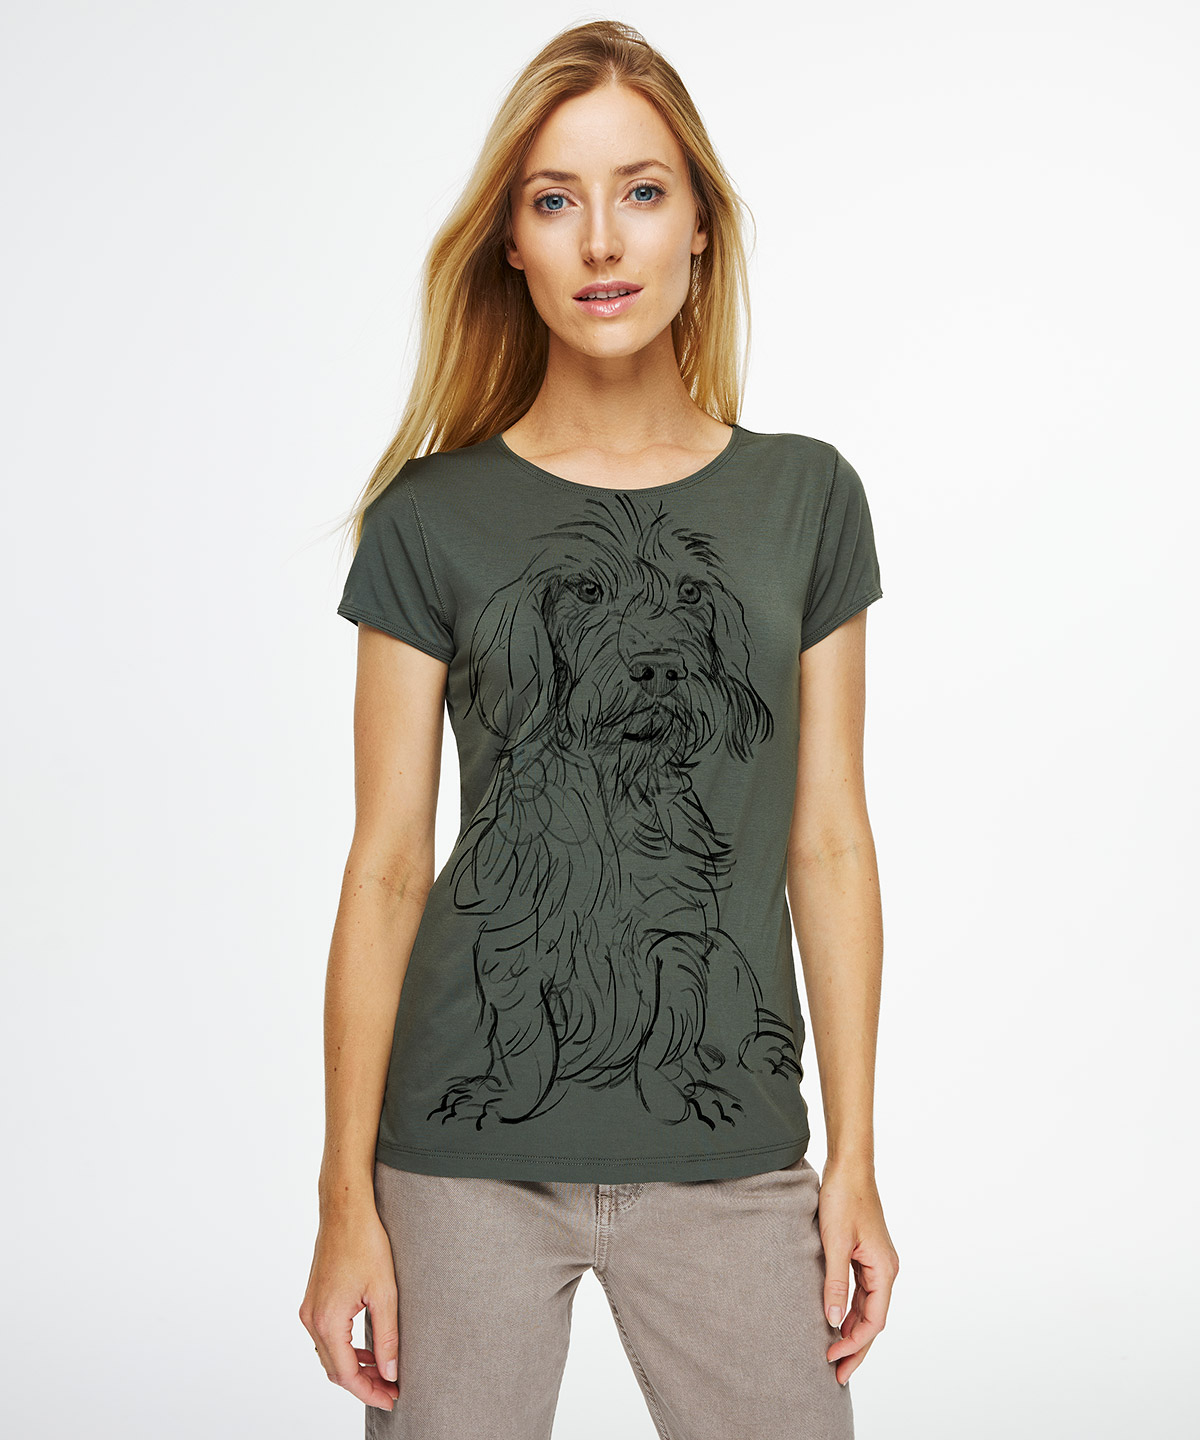 Wirehaired Dachshund khaki t-shirt woman